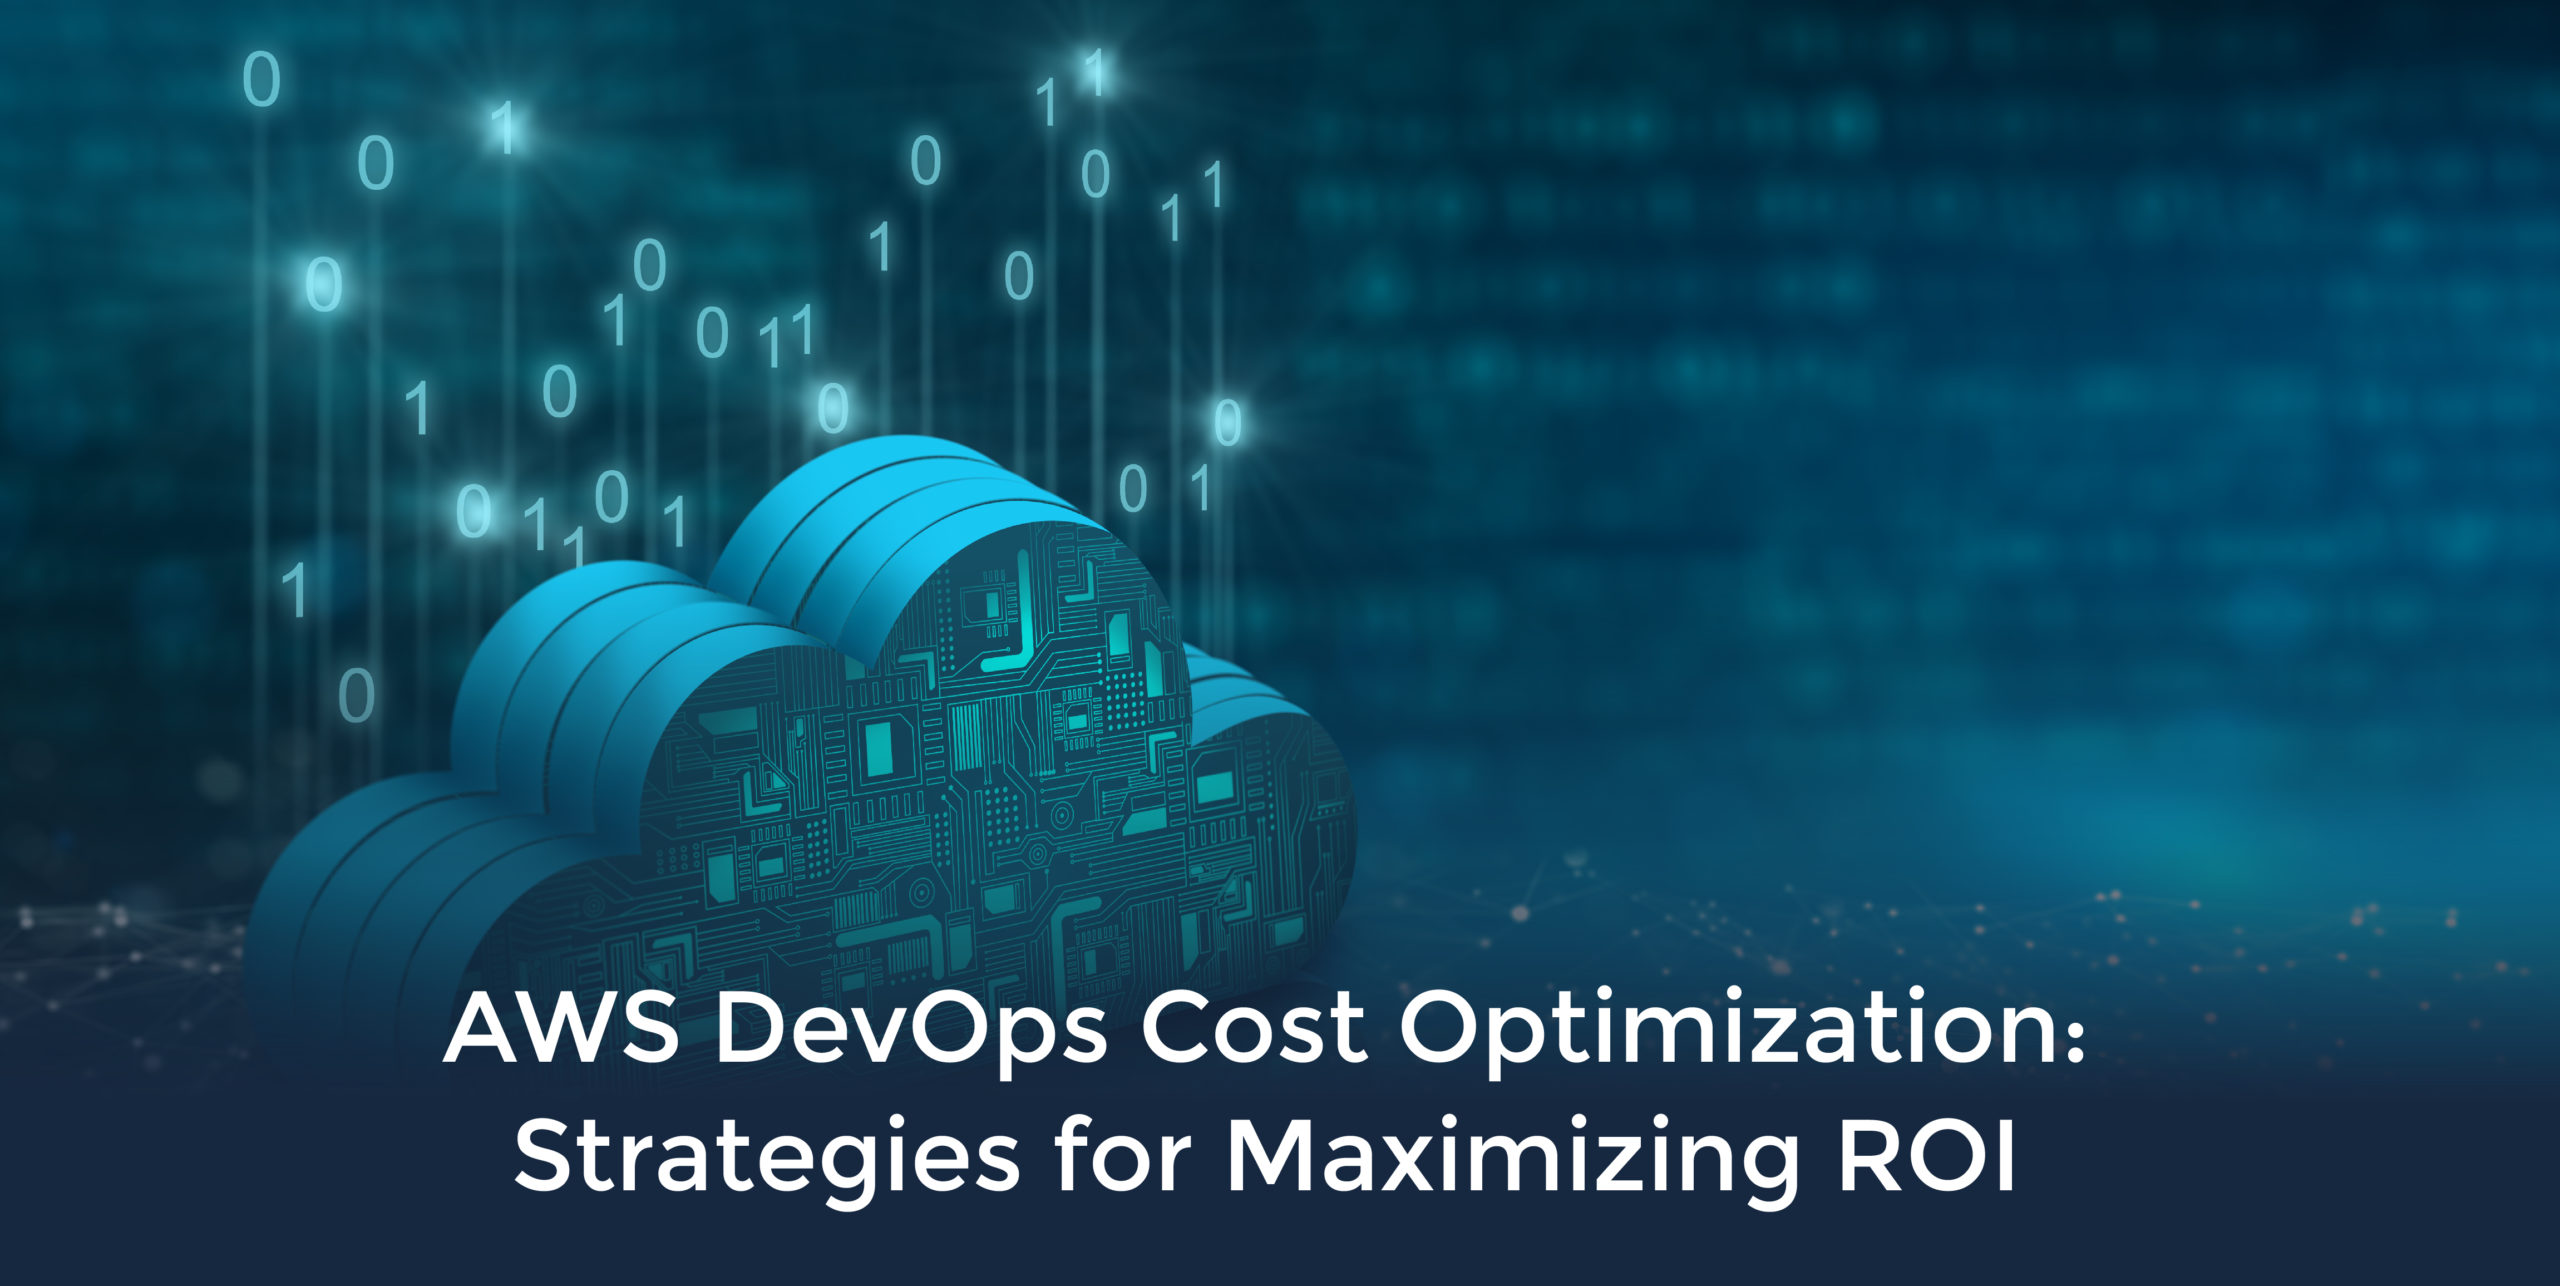 AWS DevOps Cost Optimization Strategies for Maximizing ROI